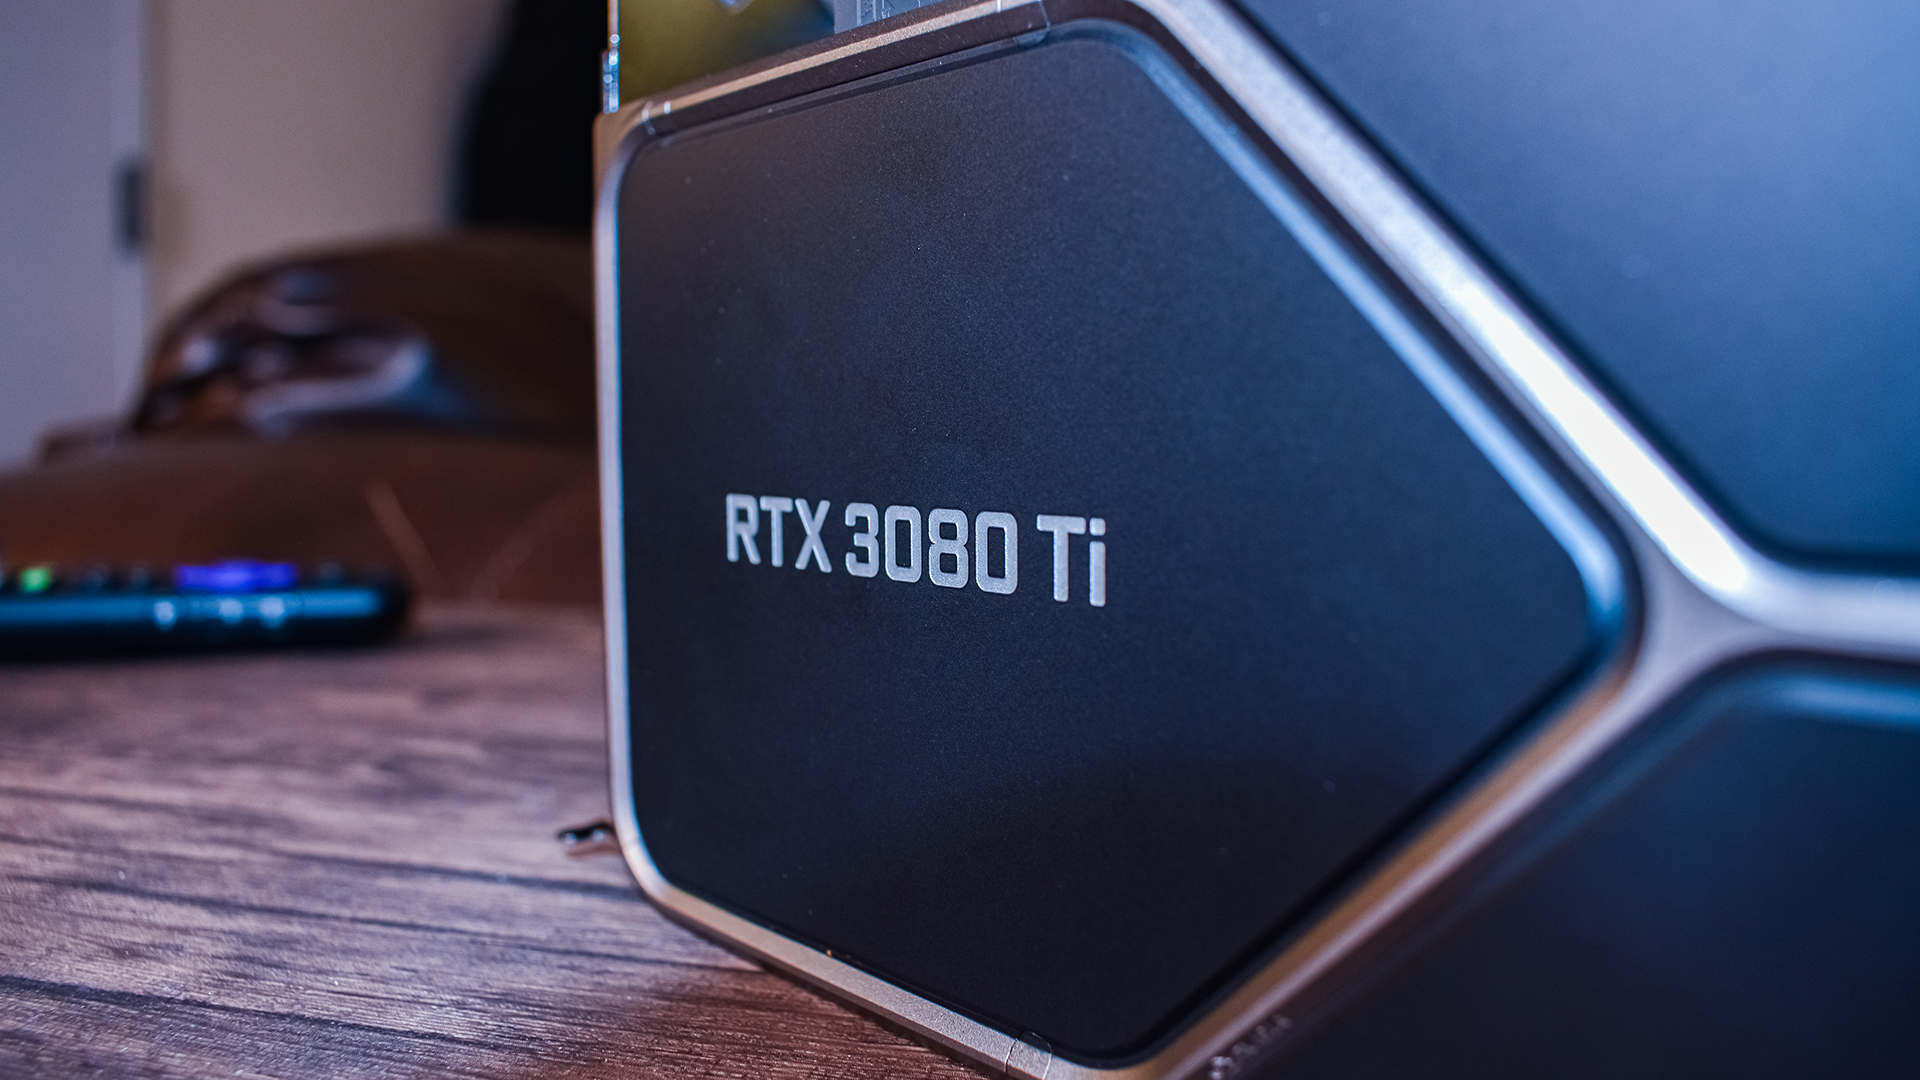 Nvidia GeForce RTX 3080 Ti on a coffee table